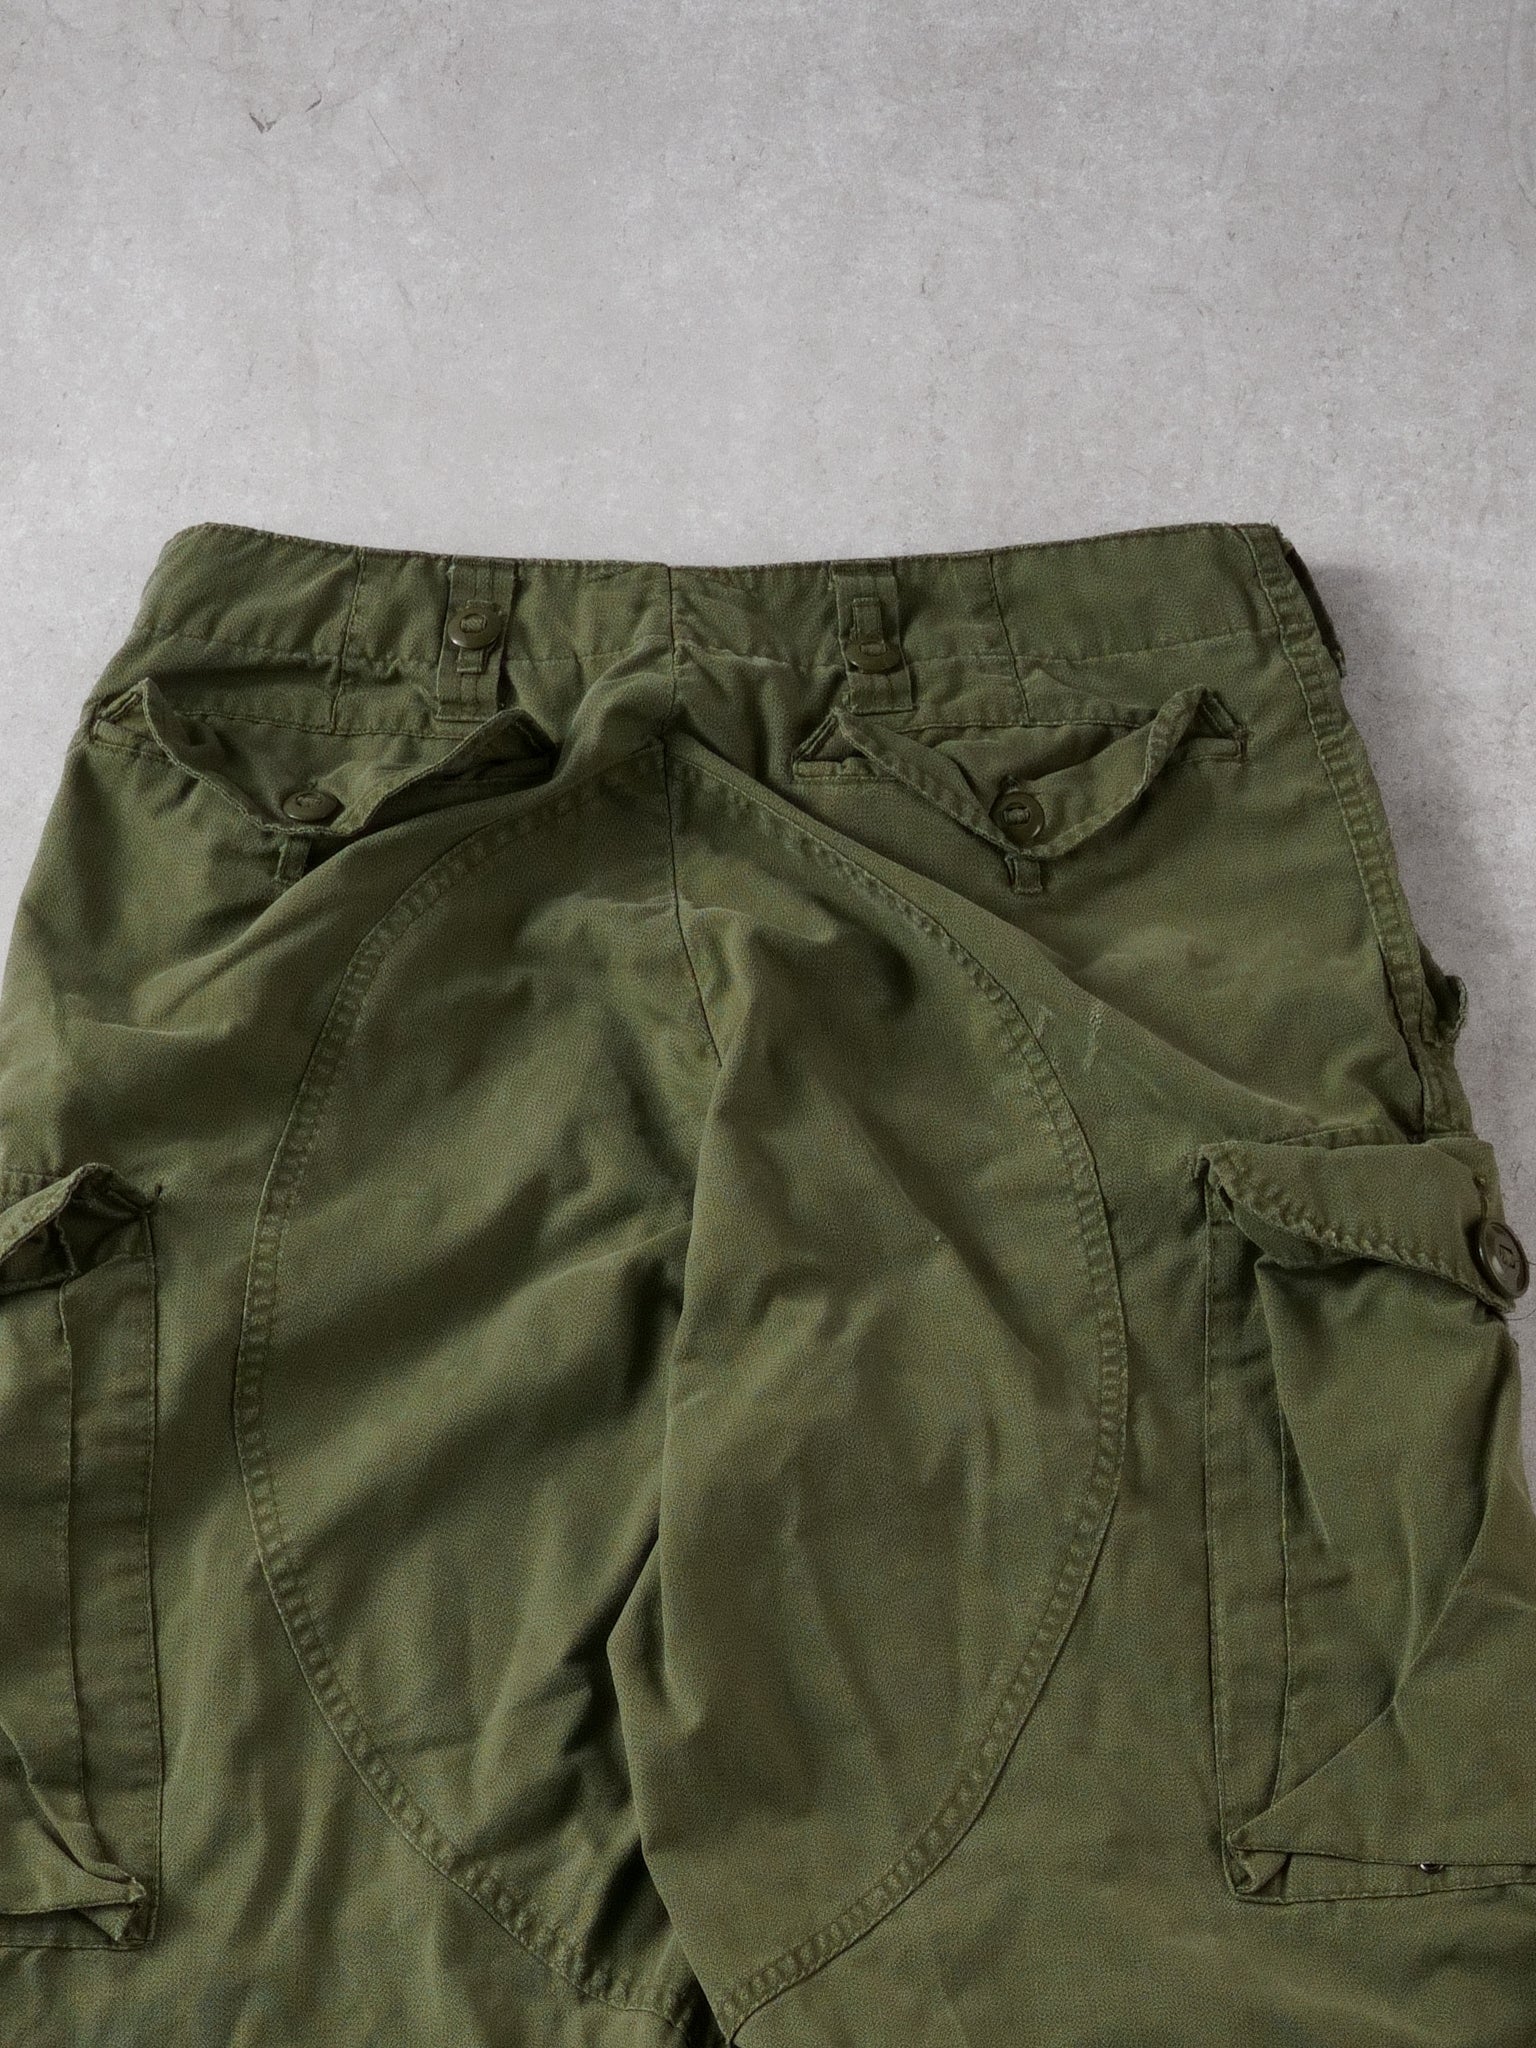 Vintage 98' Army Green Military Parachute Pants (32x30)